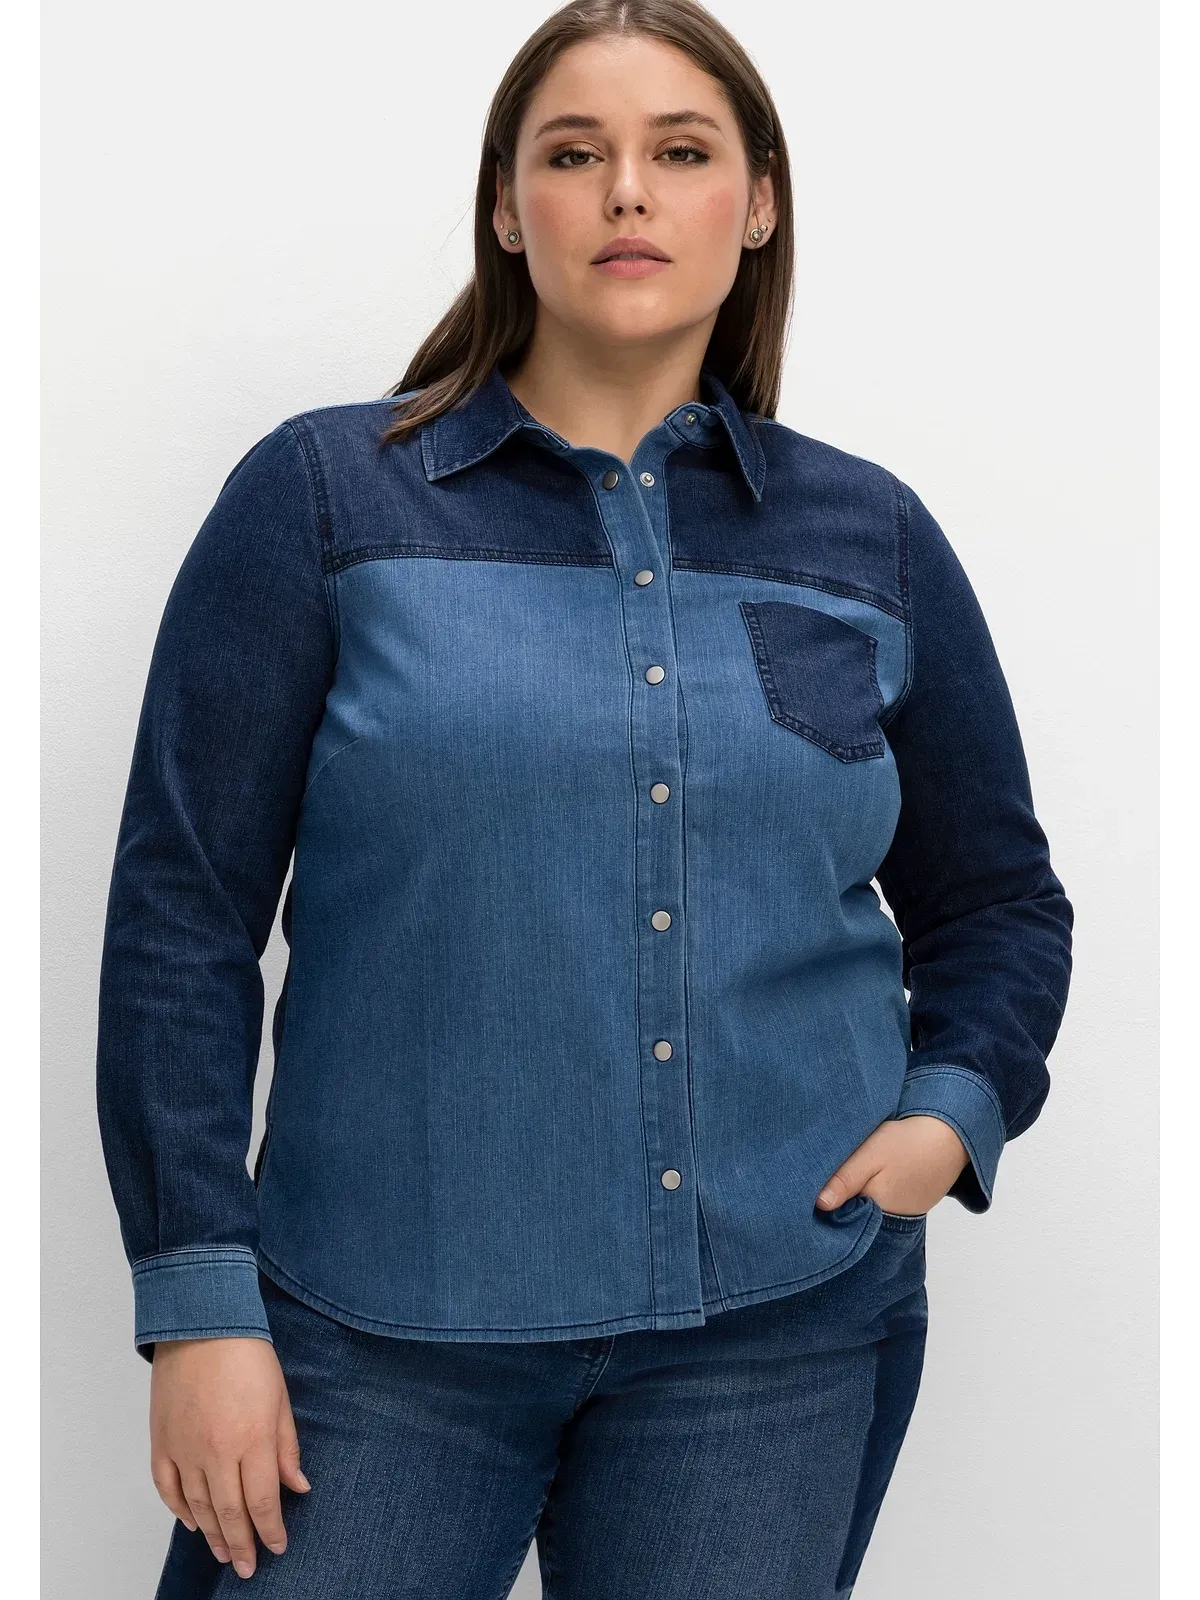 Jeansbluse SHEEGO "Große Größen" Gr. 60, blau (blue denim) Damen Blusen langarm